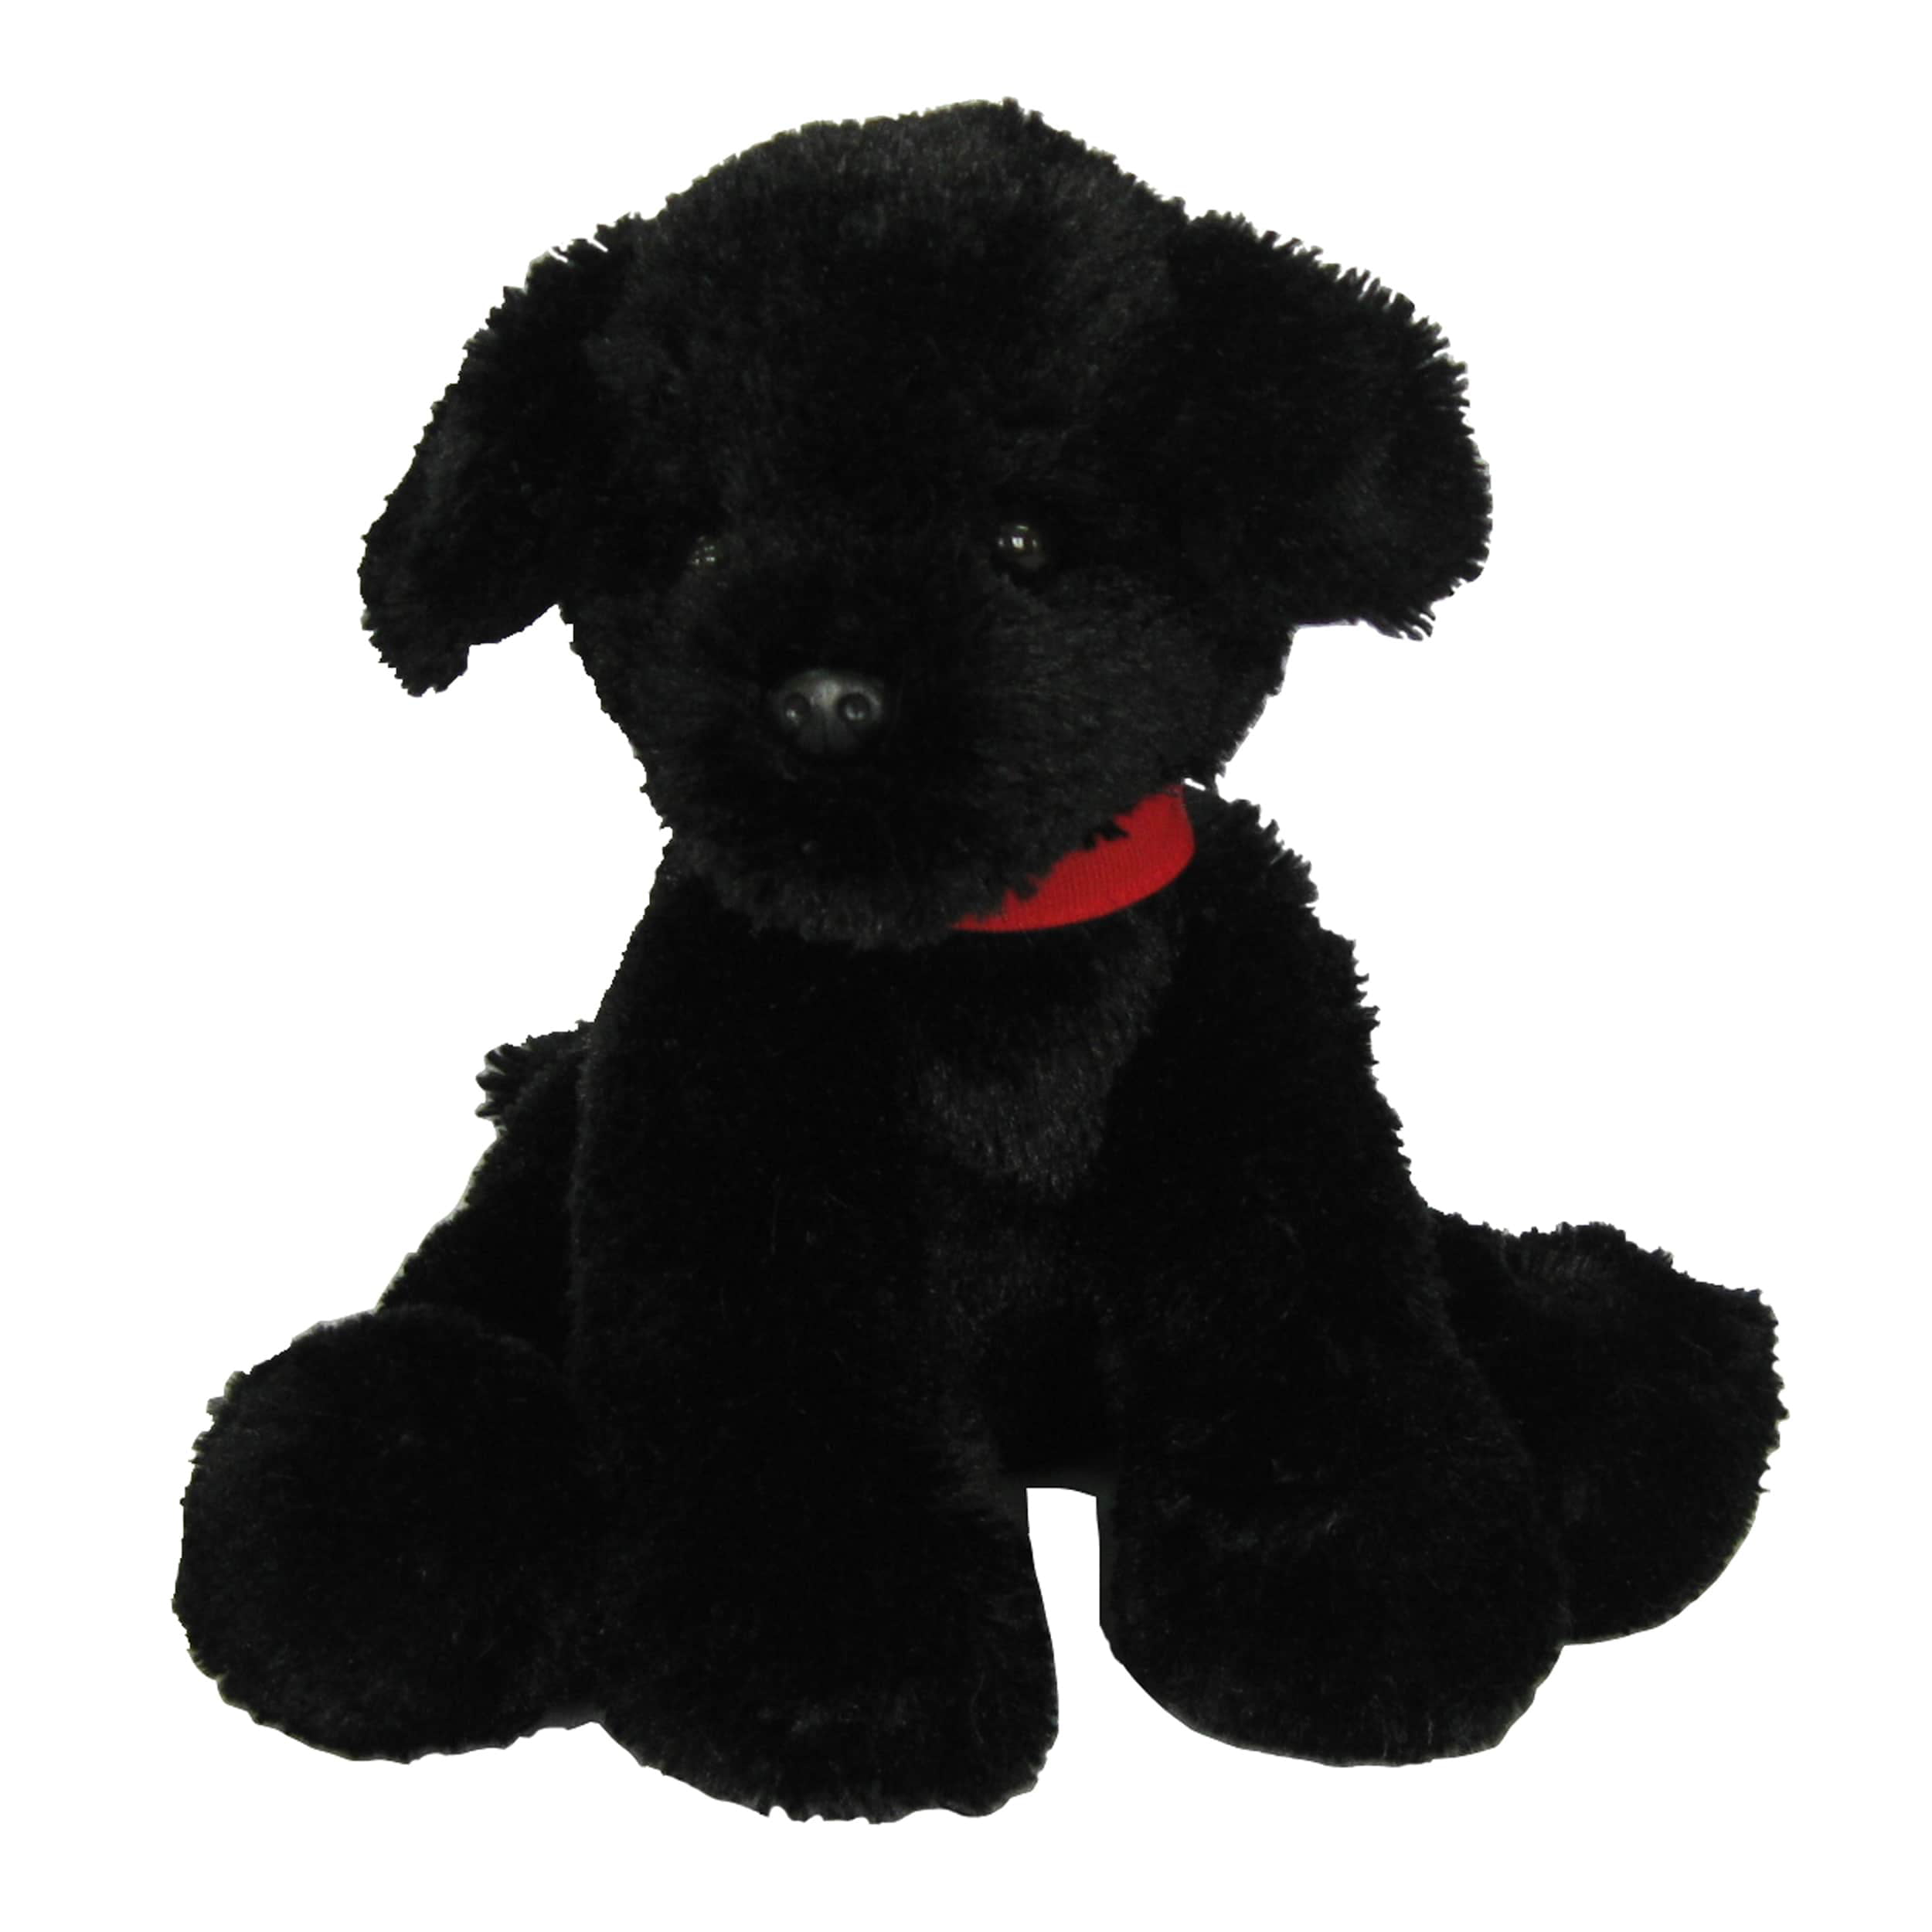 Jf2565 Cute Dog 001 ( Brand Puppy) English Title: Cuddly Dog Phone